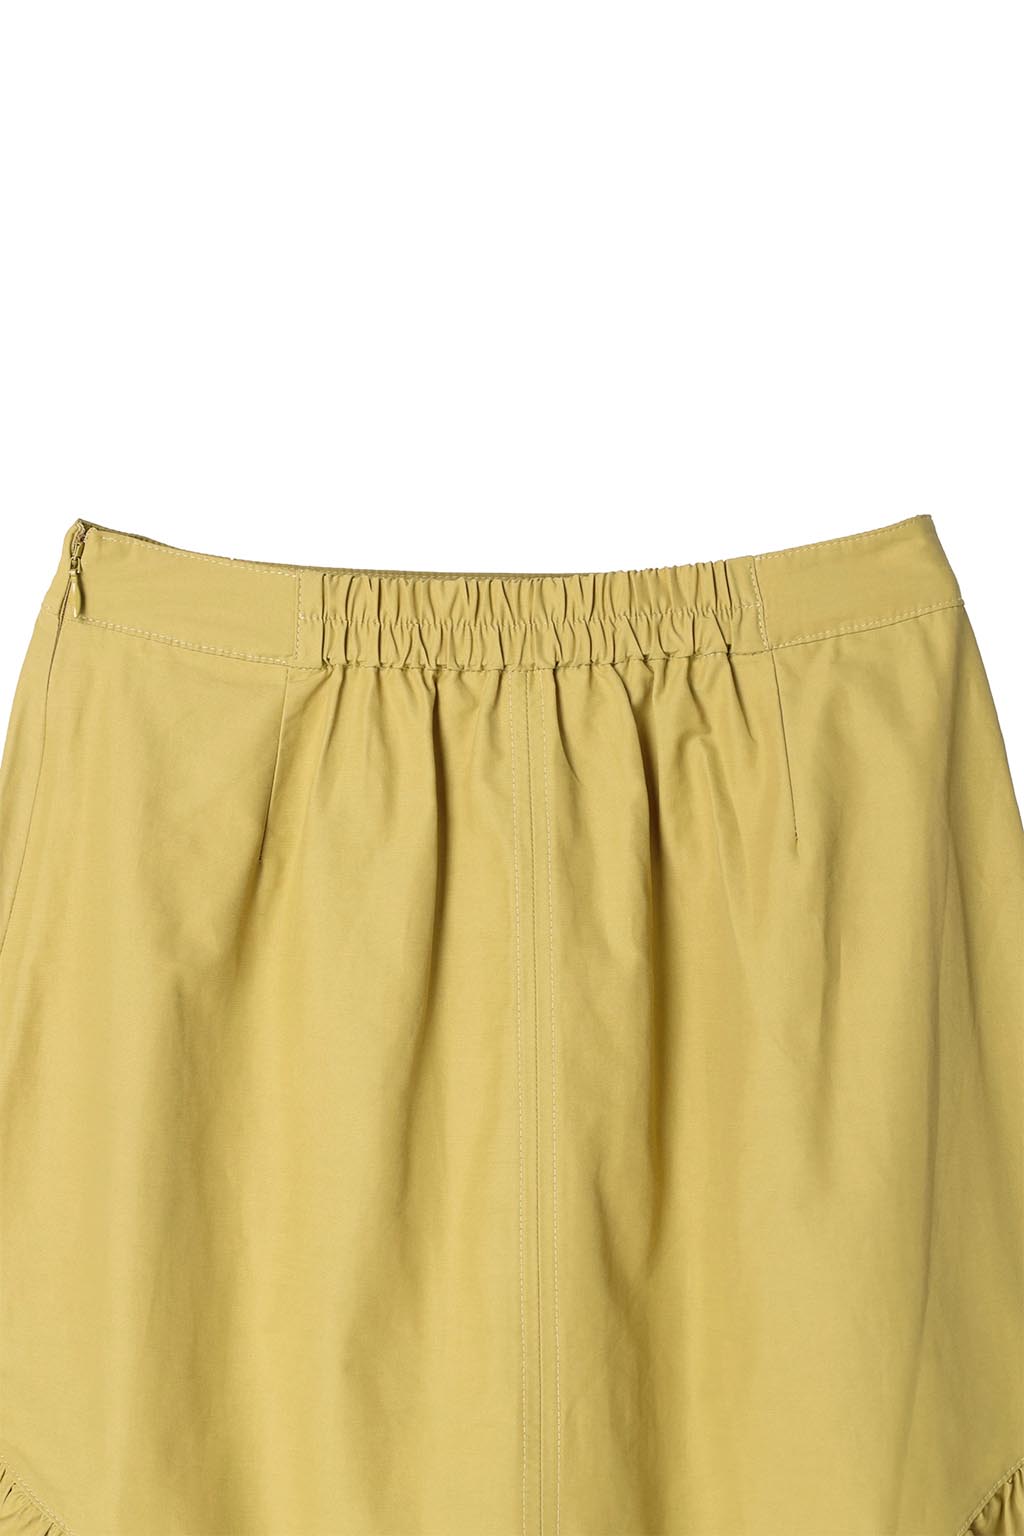 flare-long-skirt-dusty-yellow-11